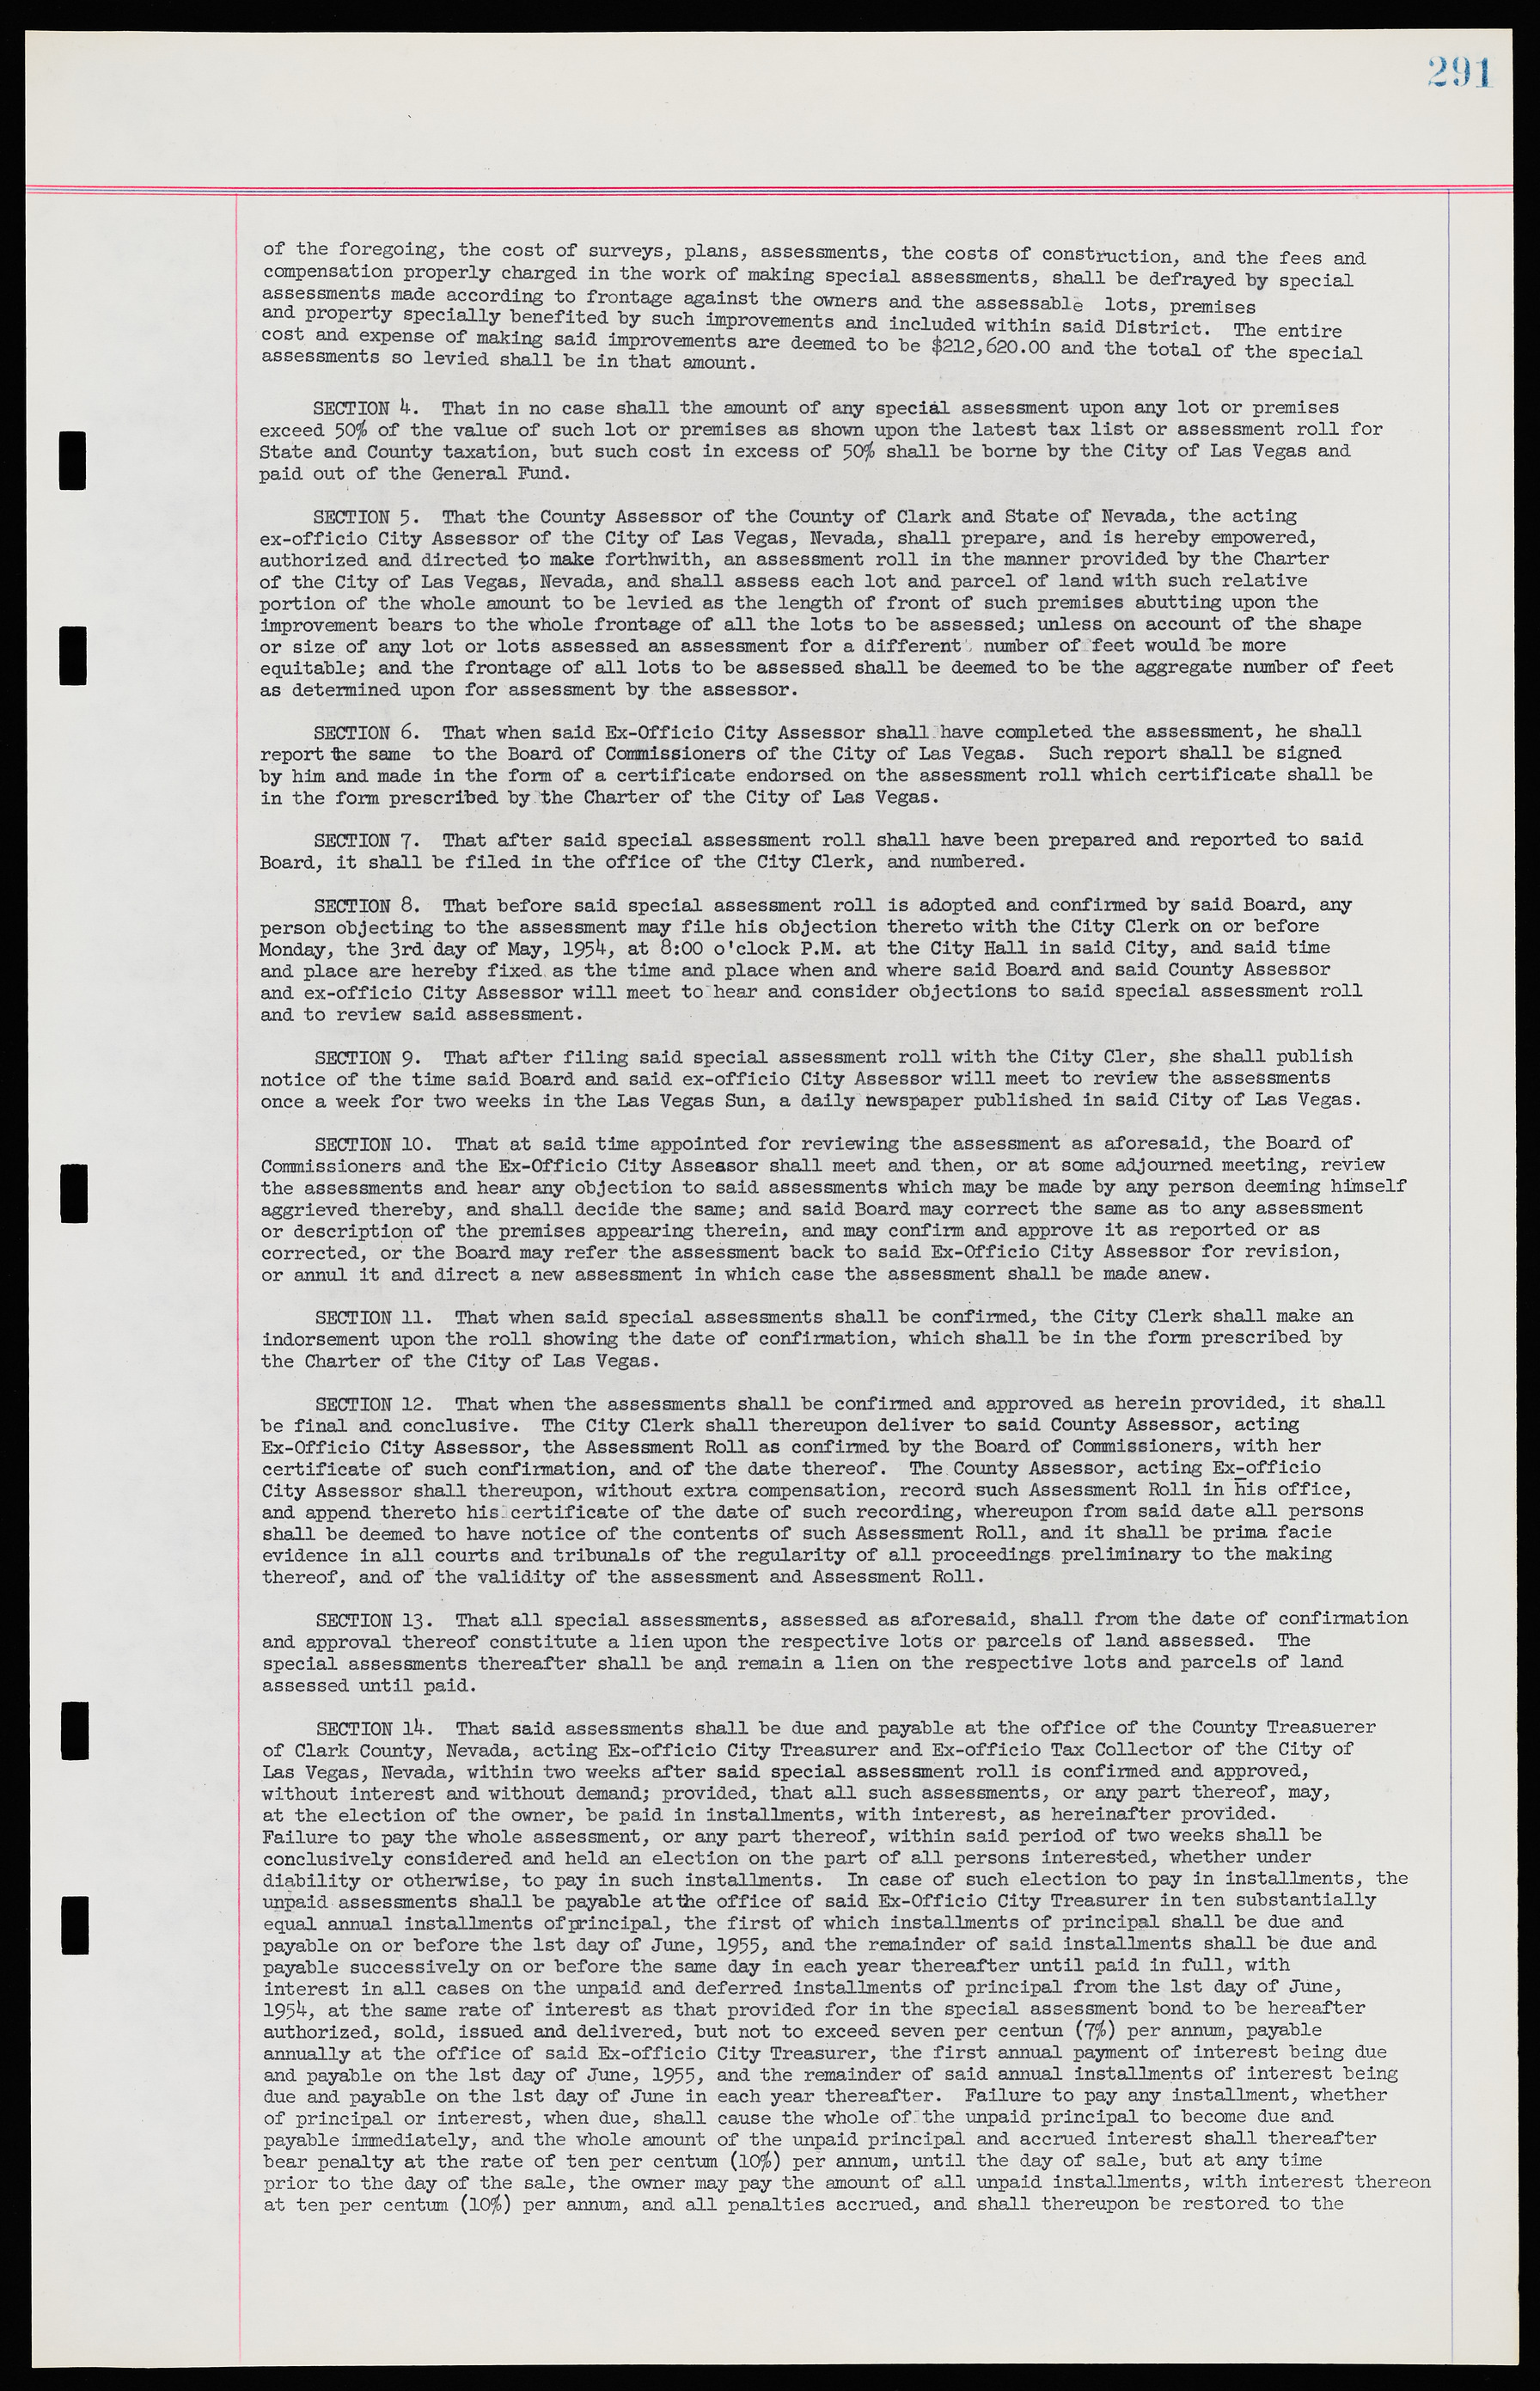 Las Vegas City Ordinances, November 13, 1950 to August 6, 1958, lvc000015-299